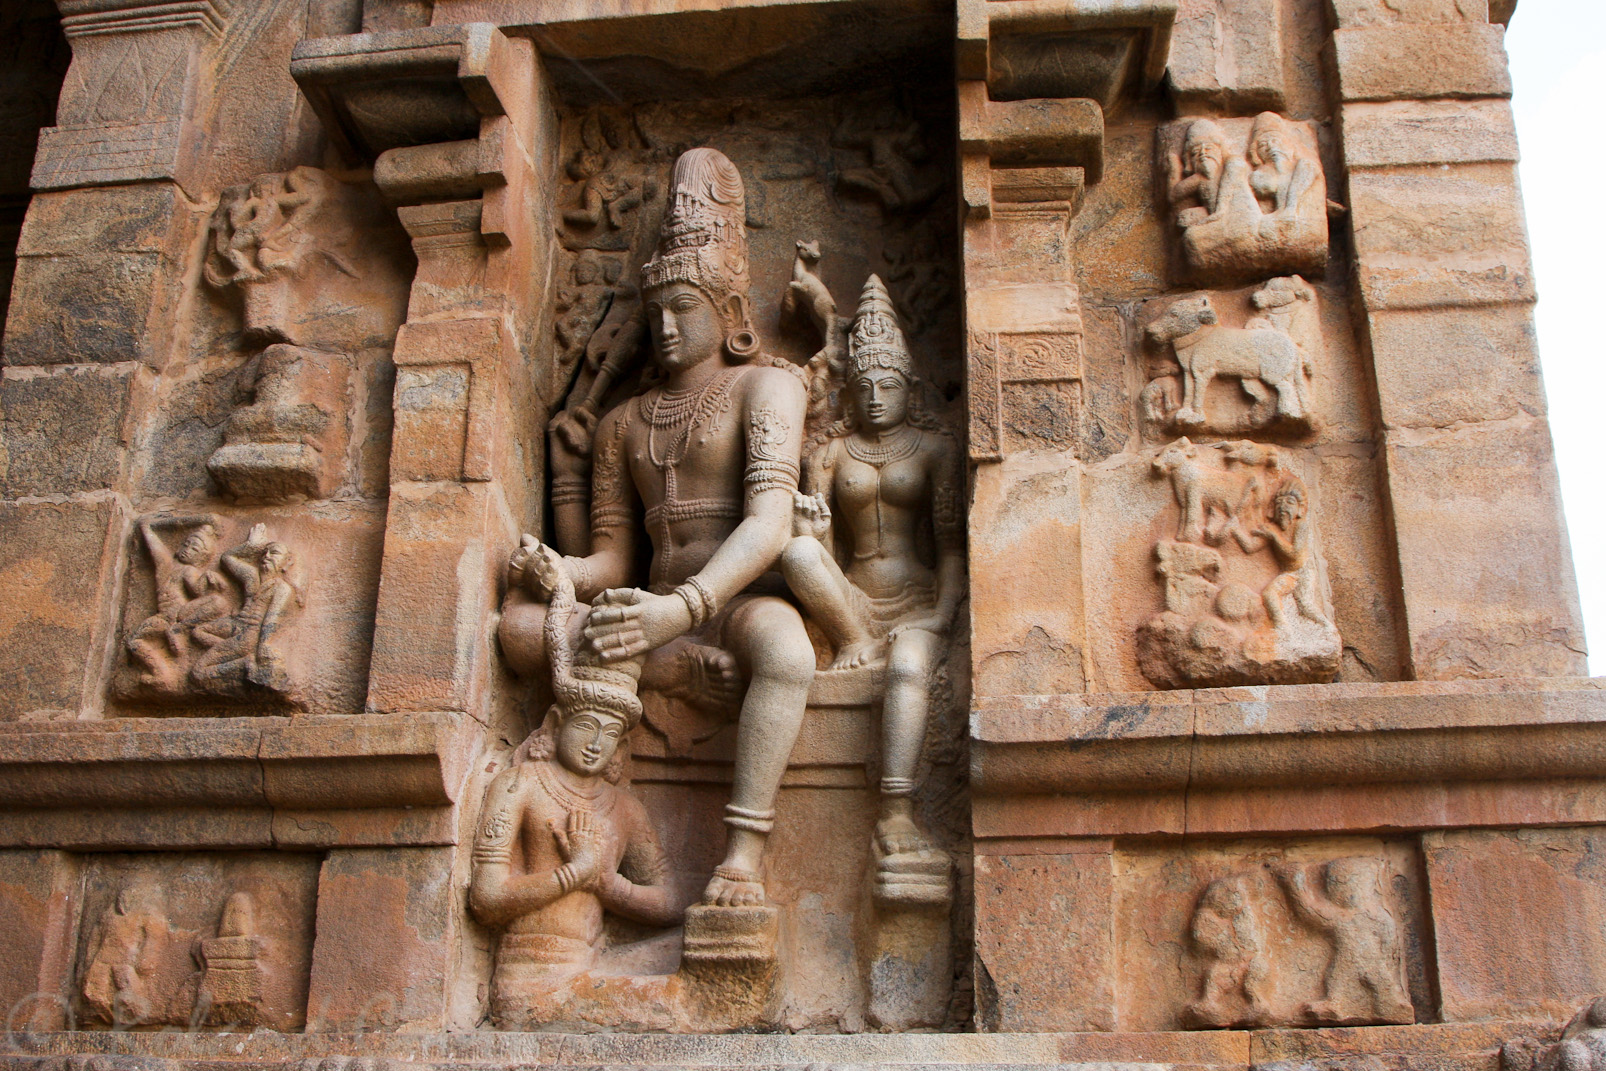 Temple de Pragatishwara : Shiva en compagnie de Parvati dépose une guirlande de fleurs sur la tête de son gardien